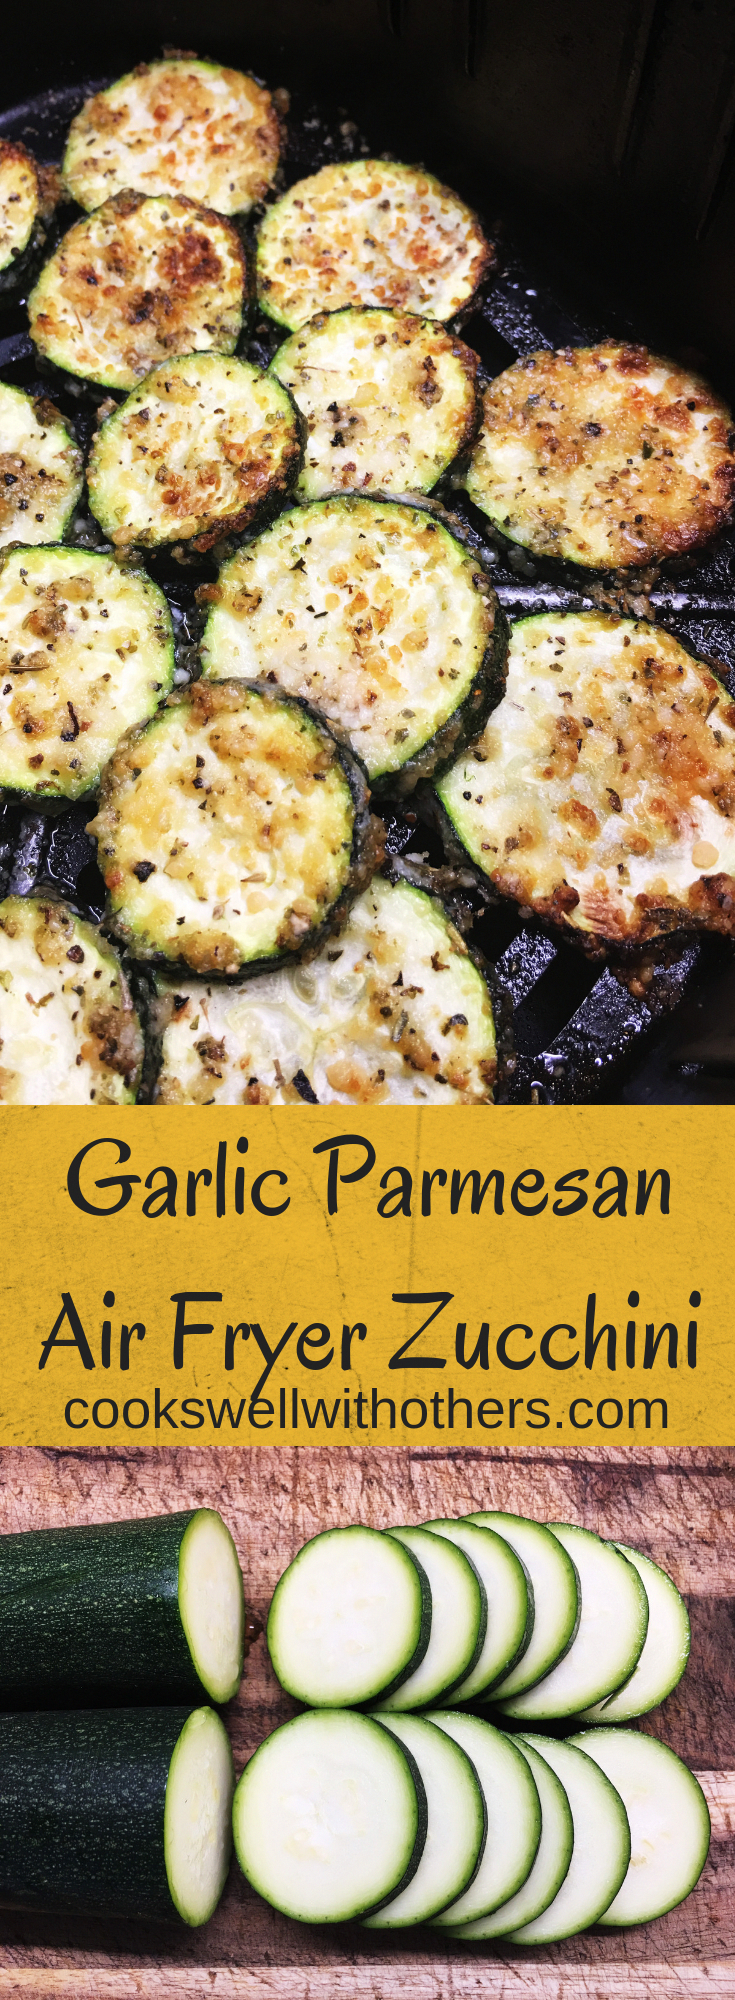 Garlic Parmesan Air Fryer Zucchini - Cooks Well With Others - Garlic Parmesan Air Fryer Zucchini - Cooks Well With Others -   19 air fryer recipes healthy vegetables ideas